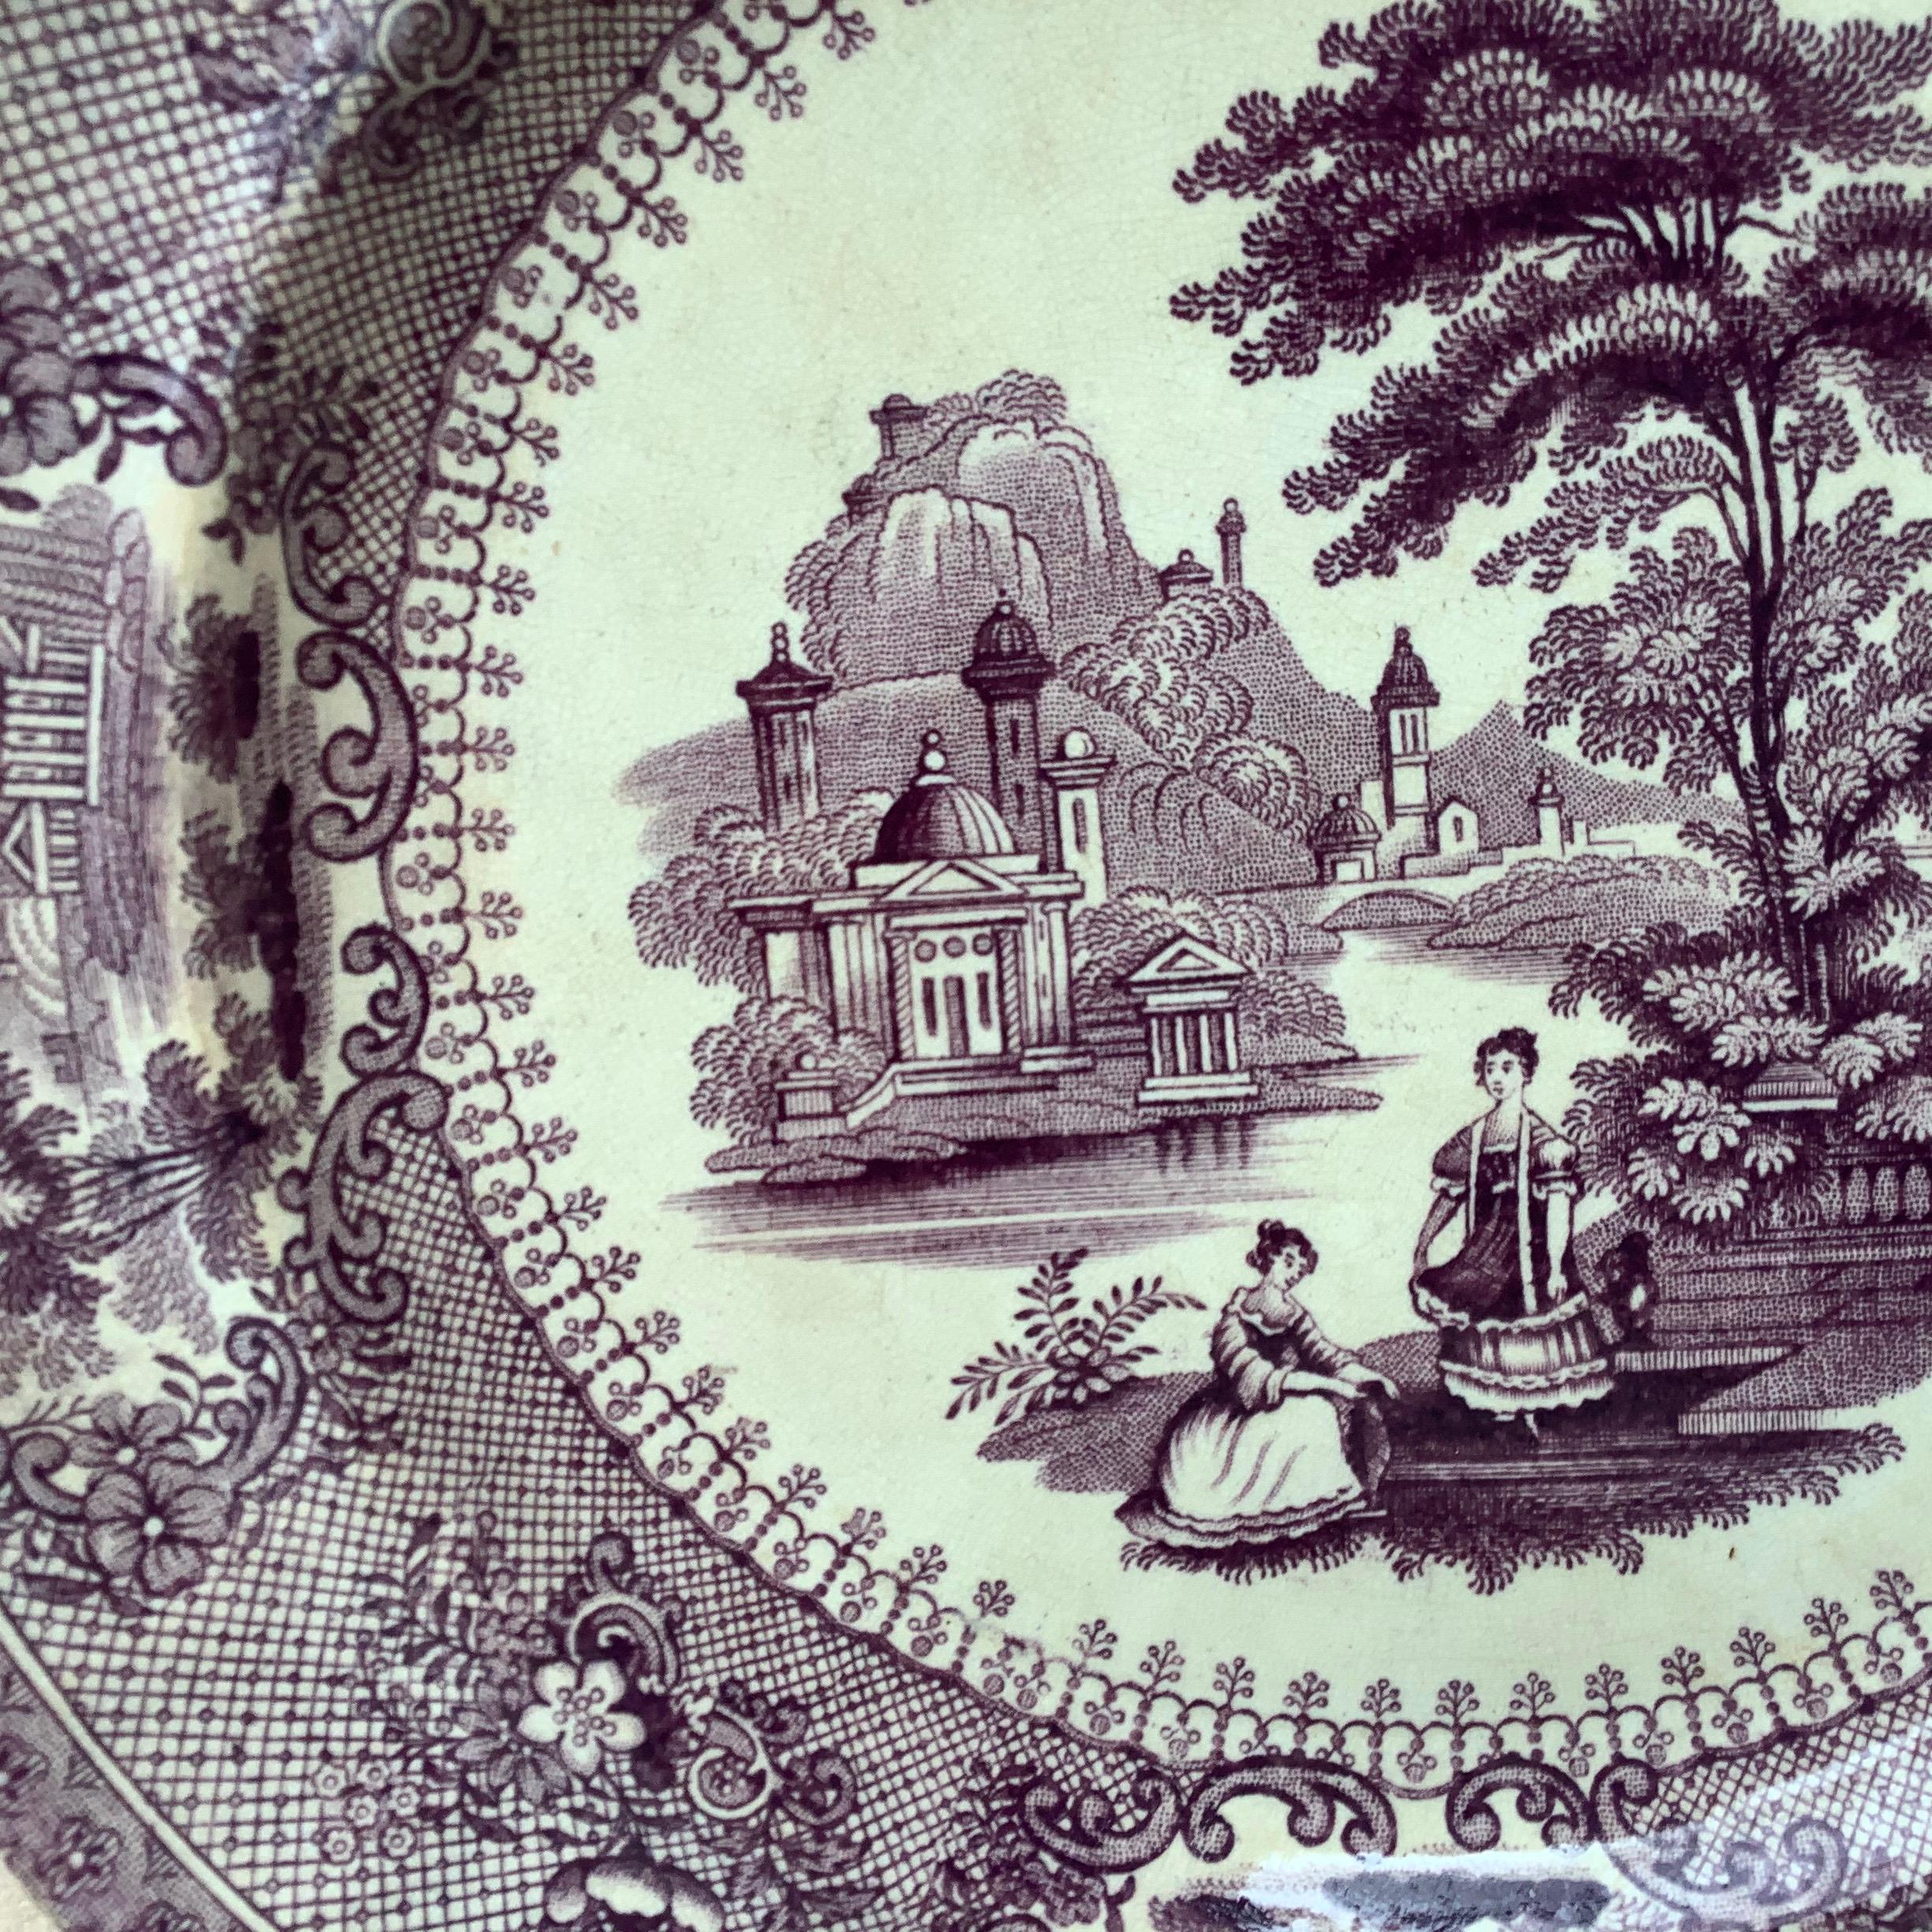 Rare English Mulberry color dinner plate signed Cork and Edge, Newport Pottery, Burslem, circa 1846–1860. Printed mark: “VERONA